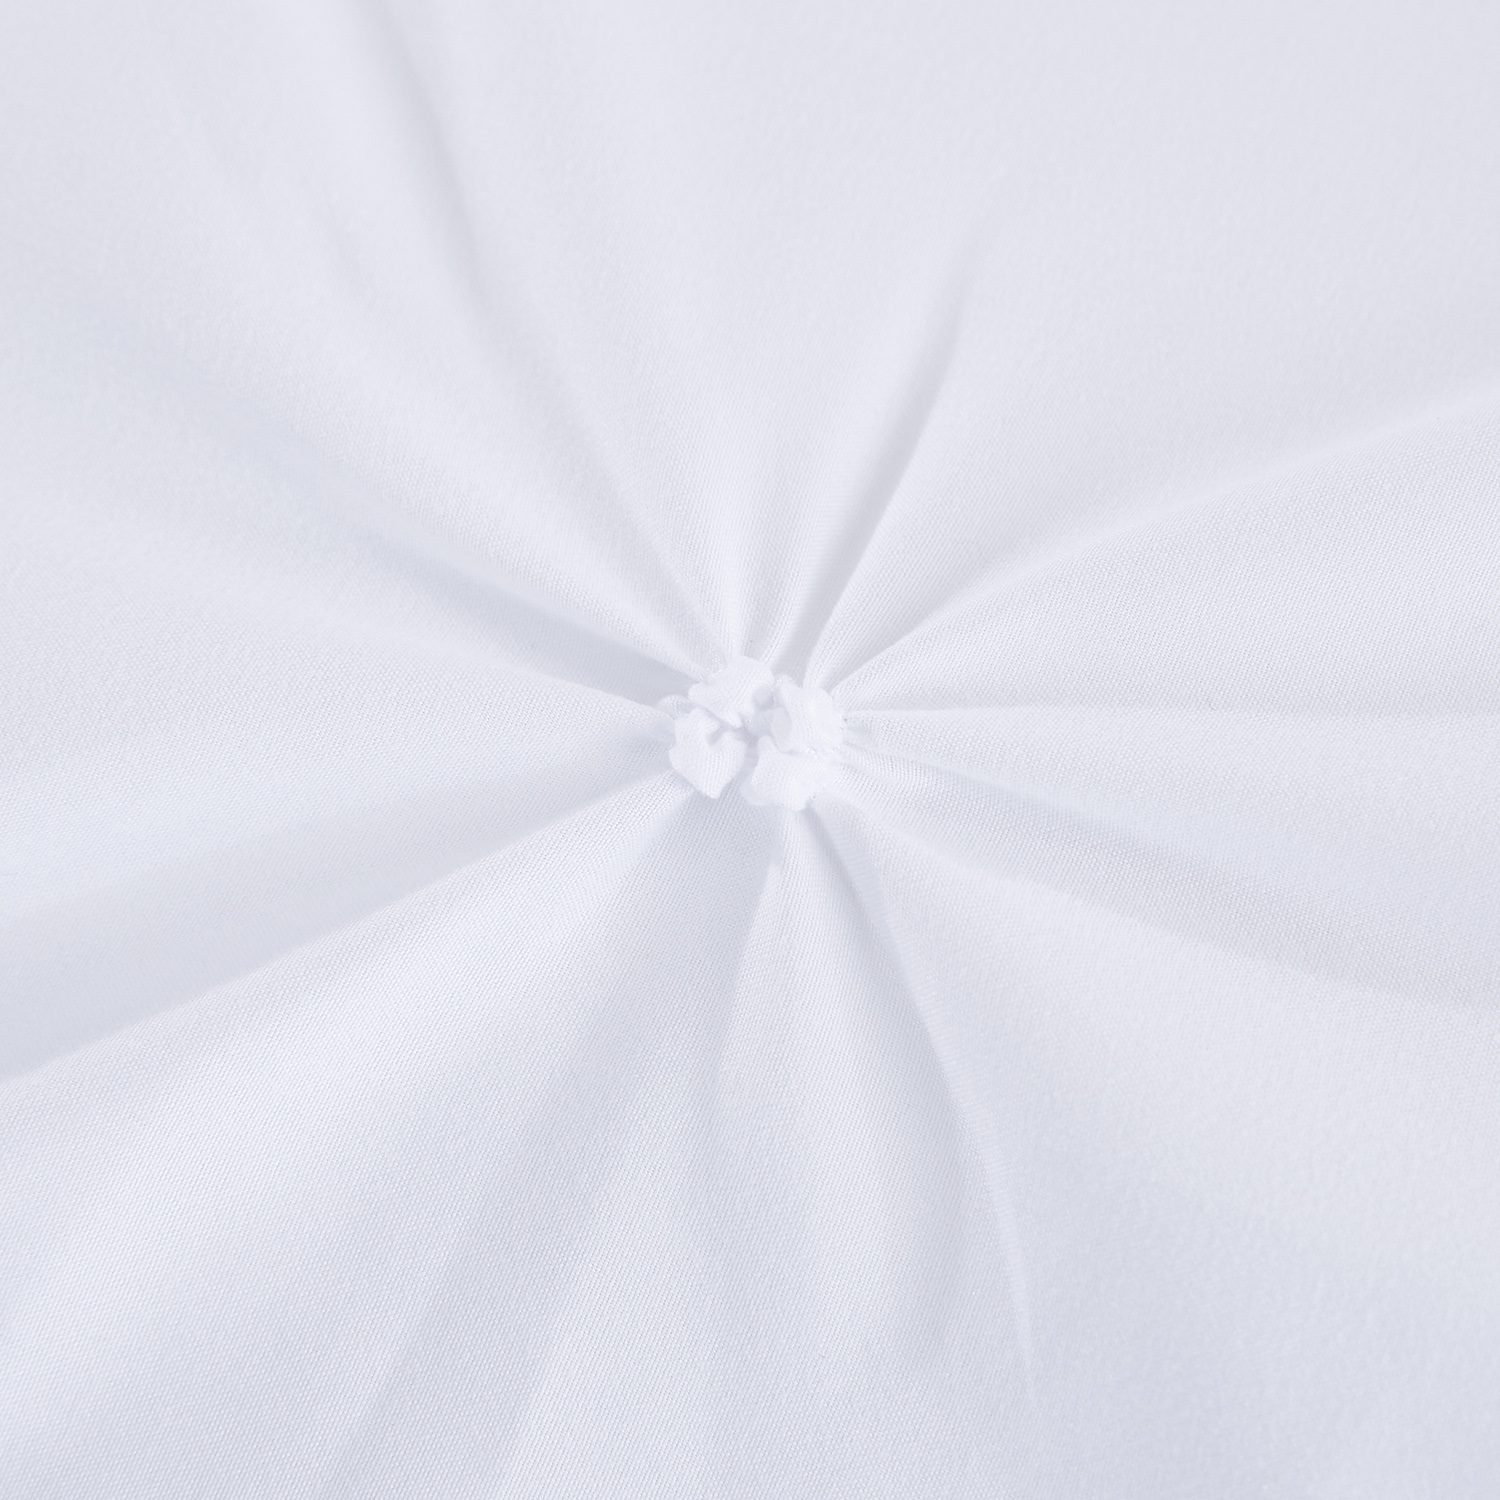 HIG White Pinch Pleat Design Luxurious Brushed Microfiber Bedding Set